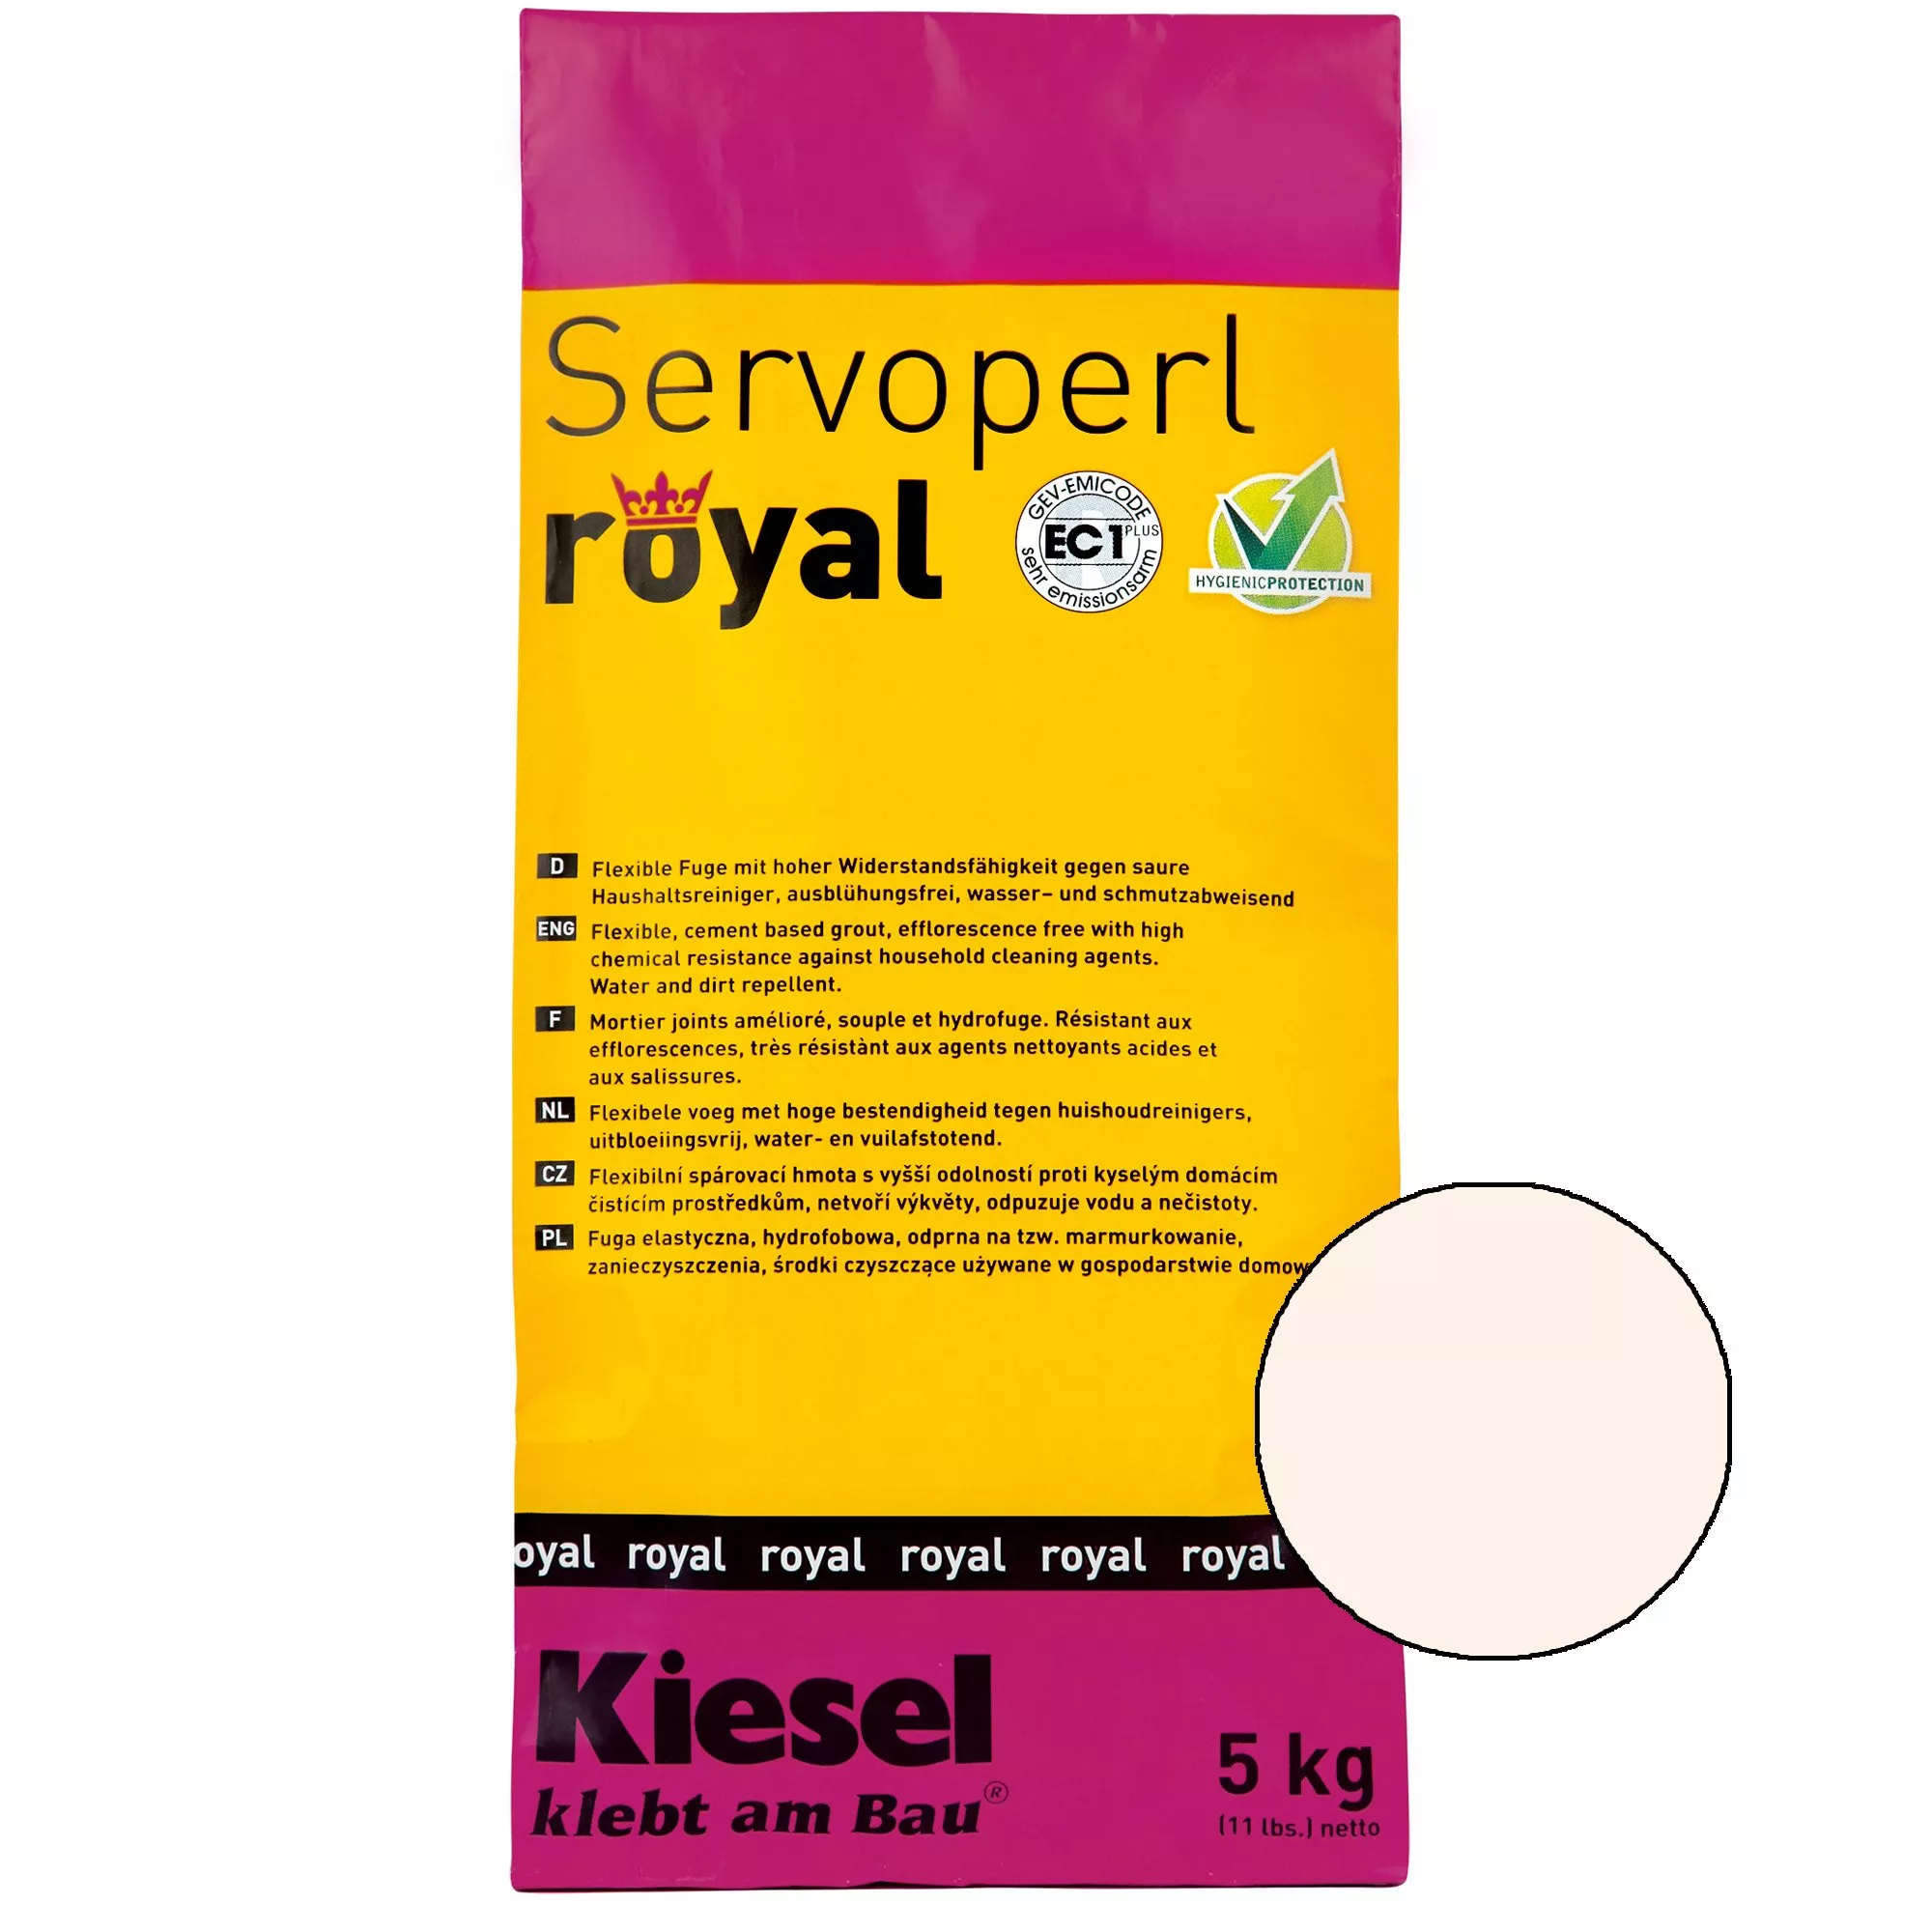 Kiesel Servoperl royal - composto comum - 5 kg Pergamon